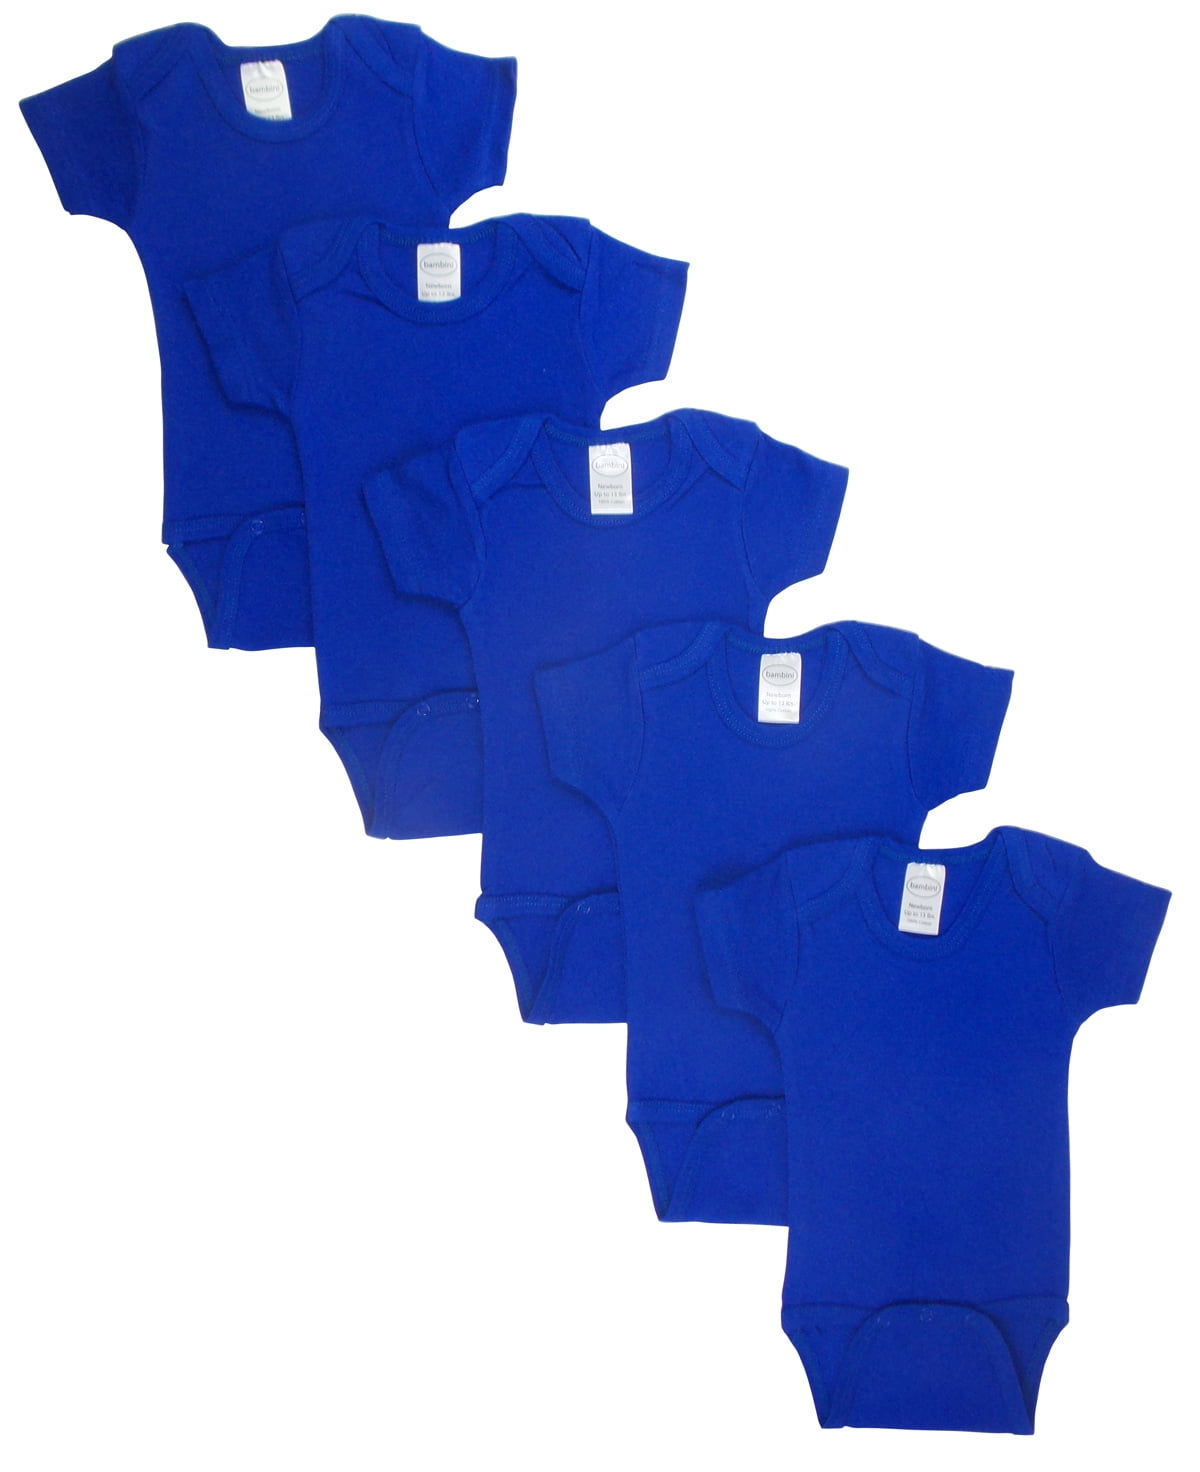 Ls-0169 Short Sleeve Bodysuit - Blue, Large - Pack Of 5